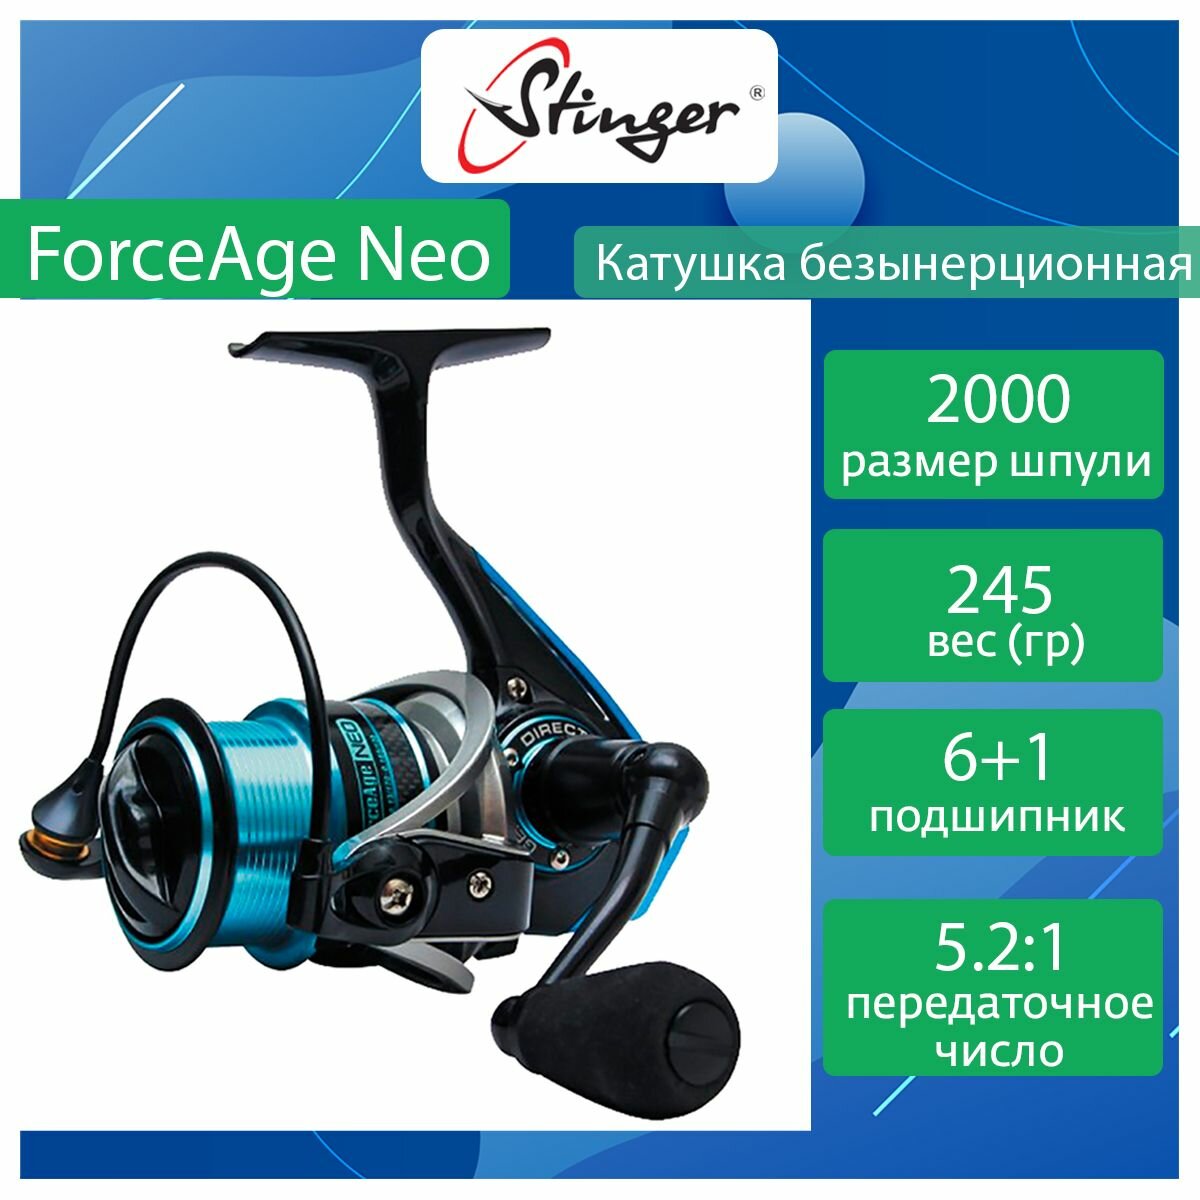 Катушка для рыбалки безынерционная Stinger ForceAge Neo 2000